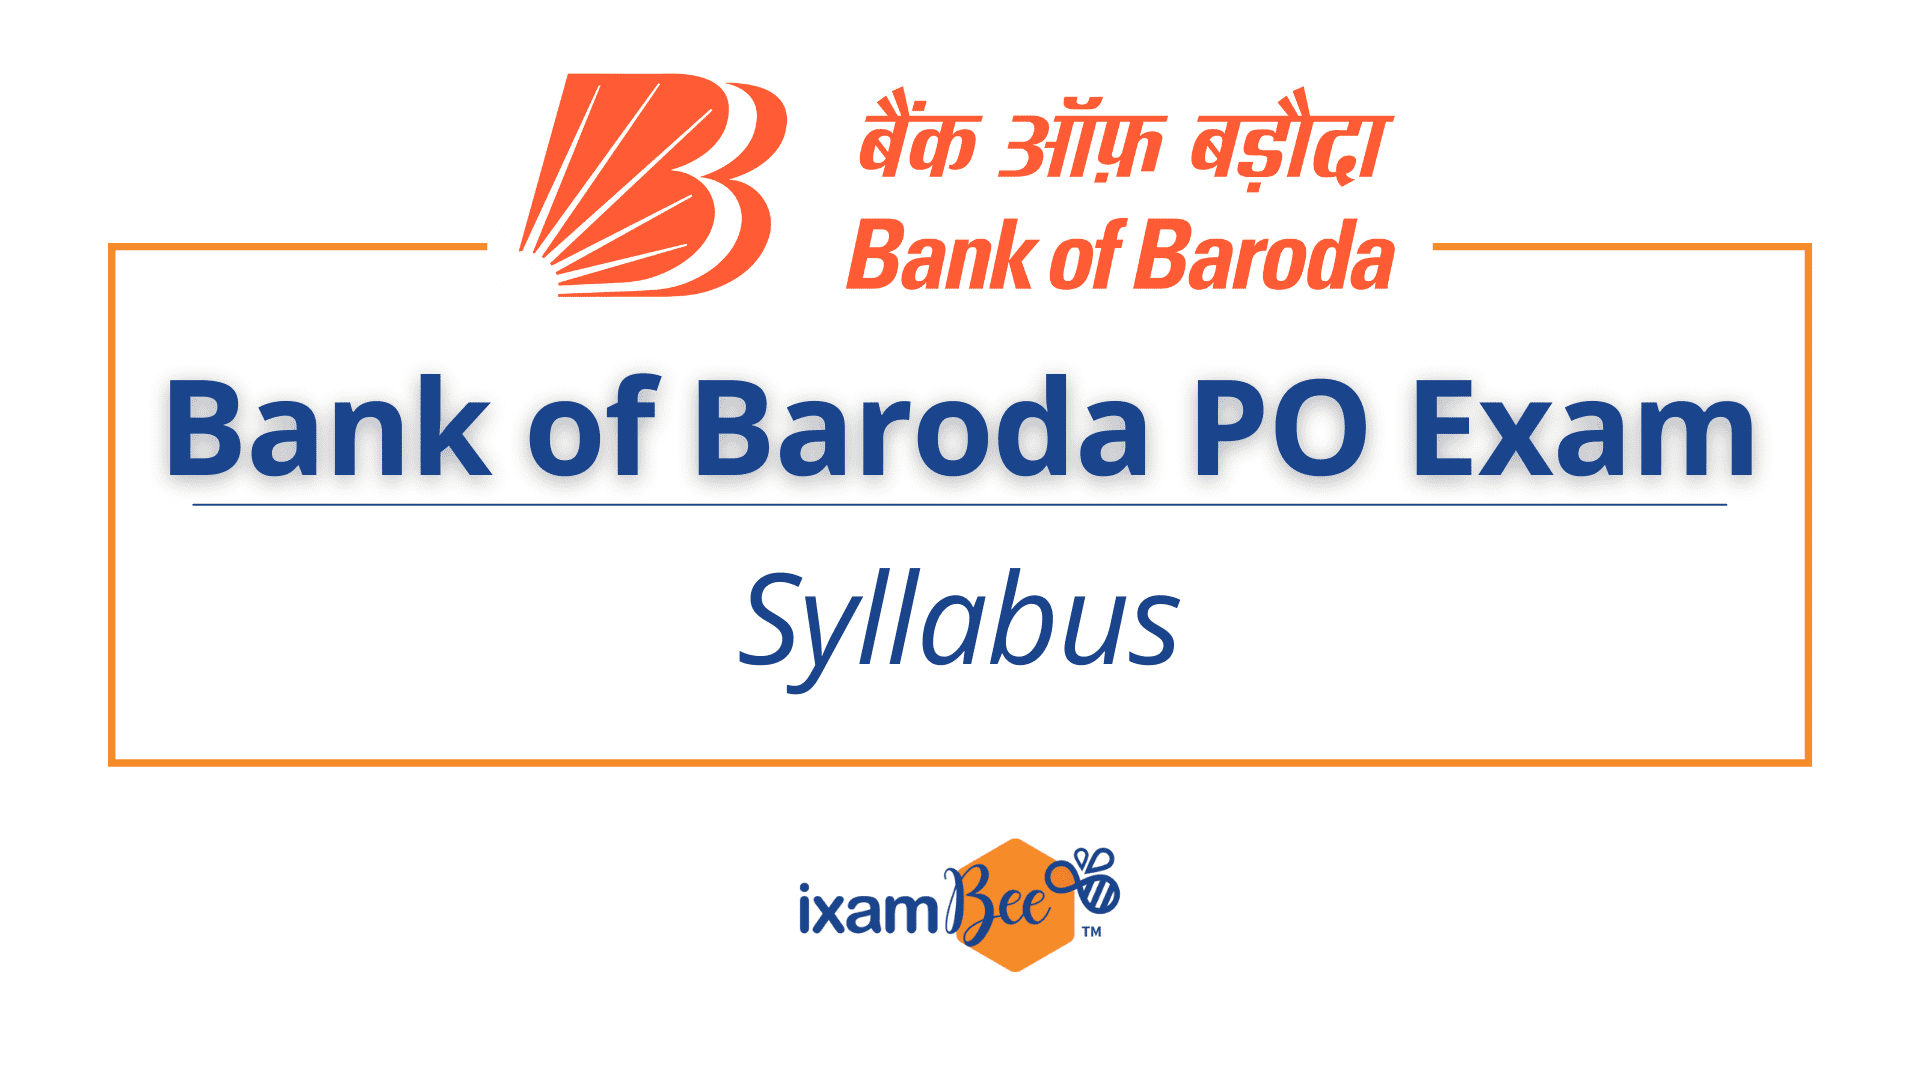 Bank of Baroda PO Exam Syllabus